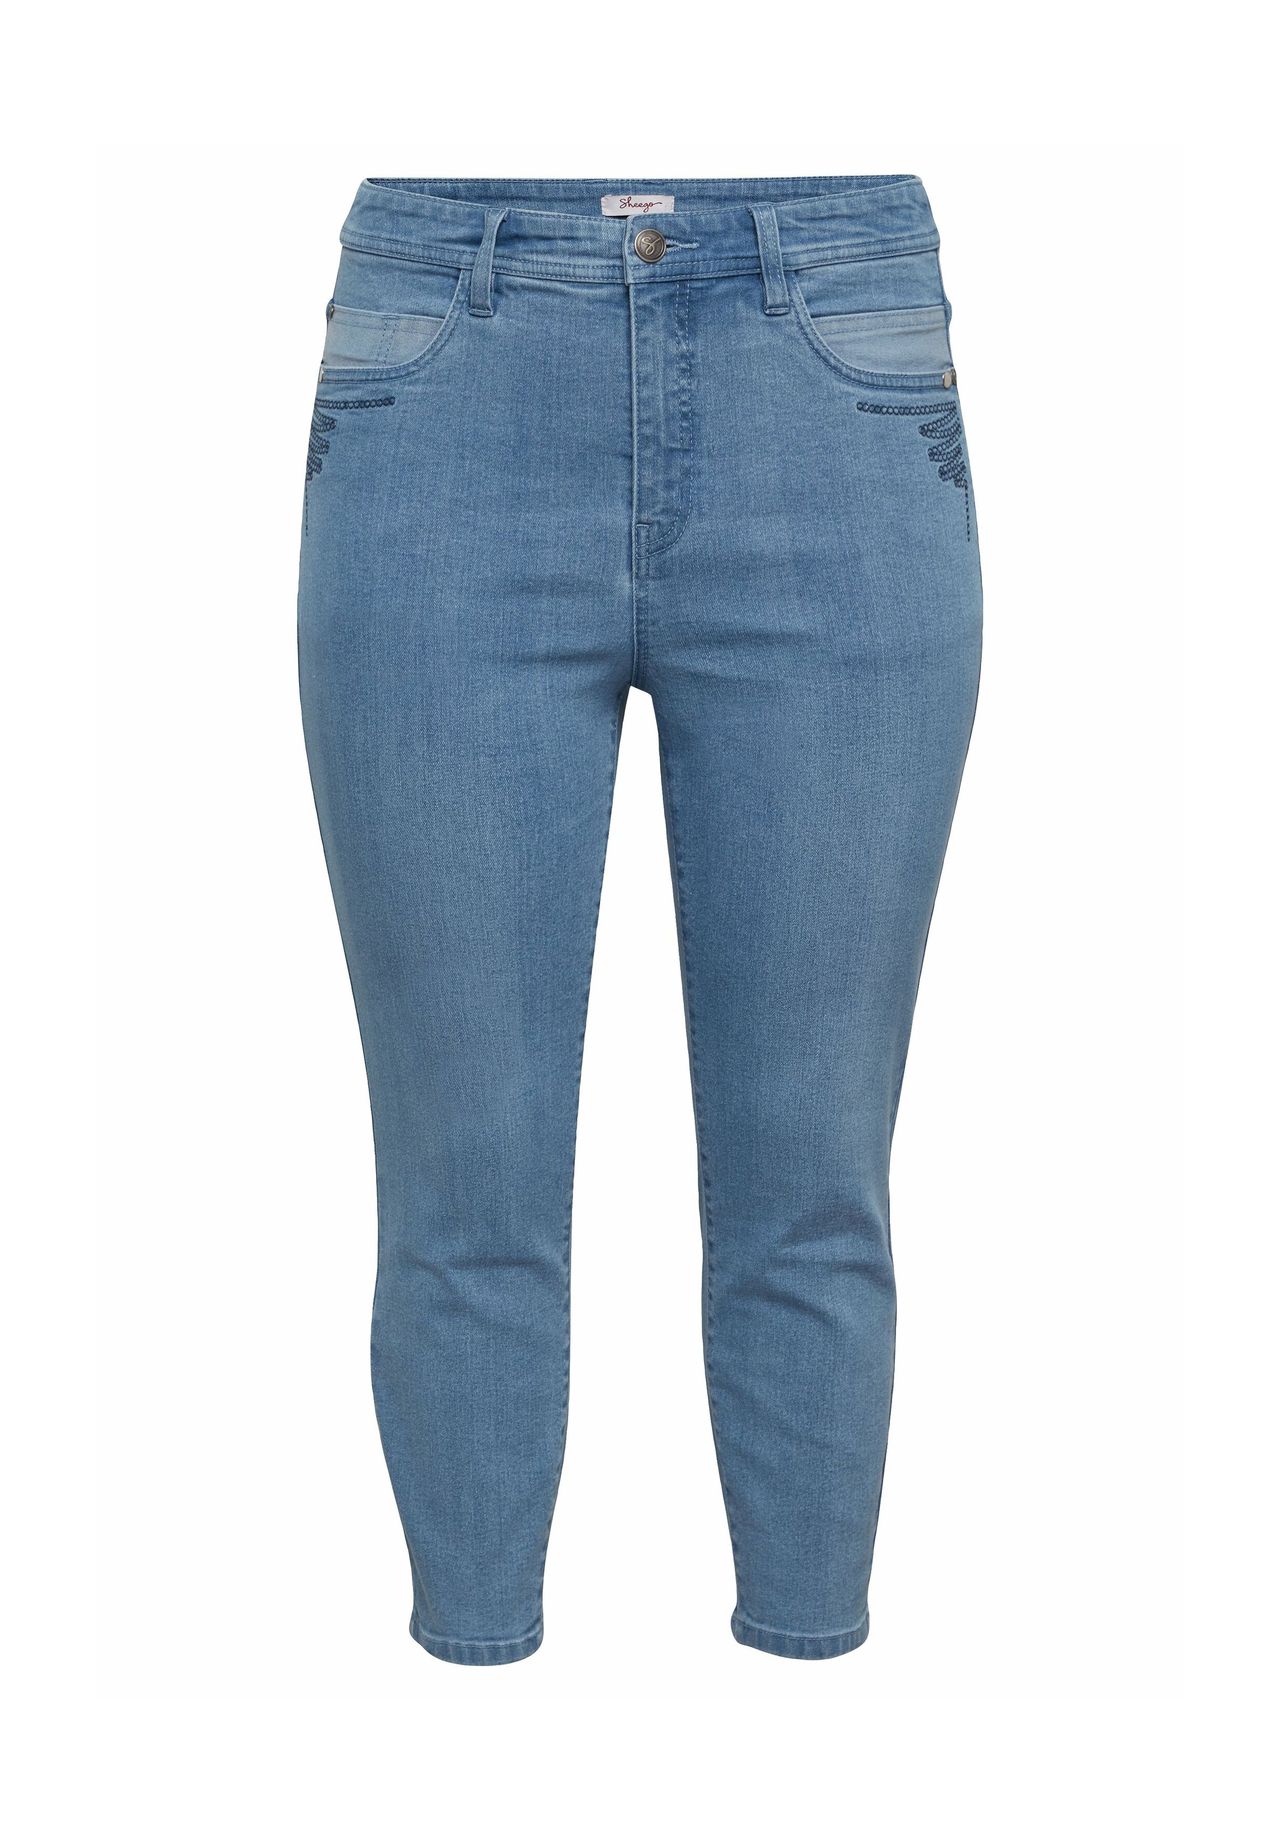 Light blue jeans kaufen | GALERIA